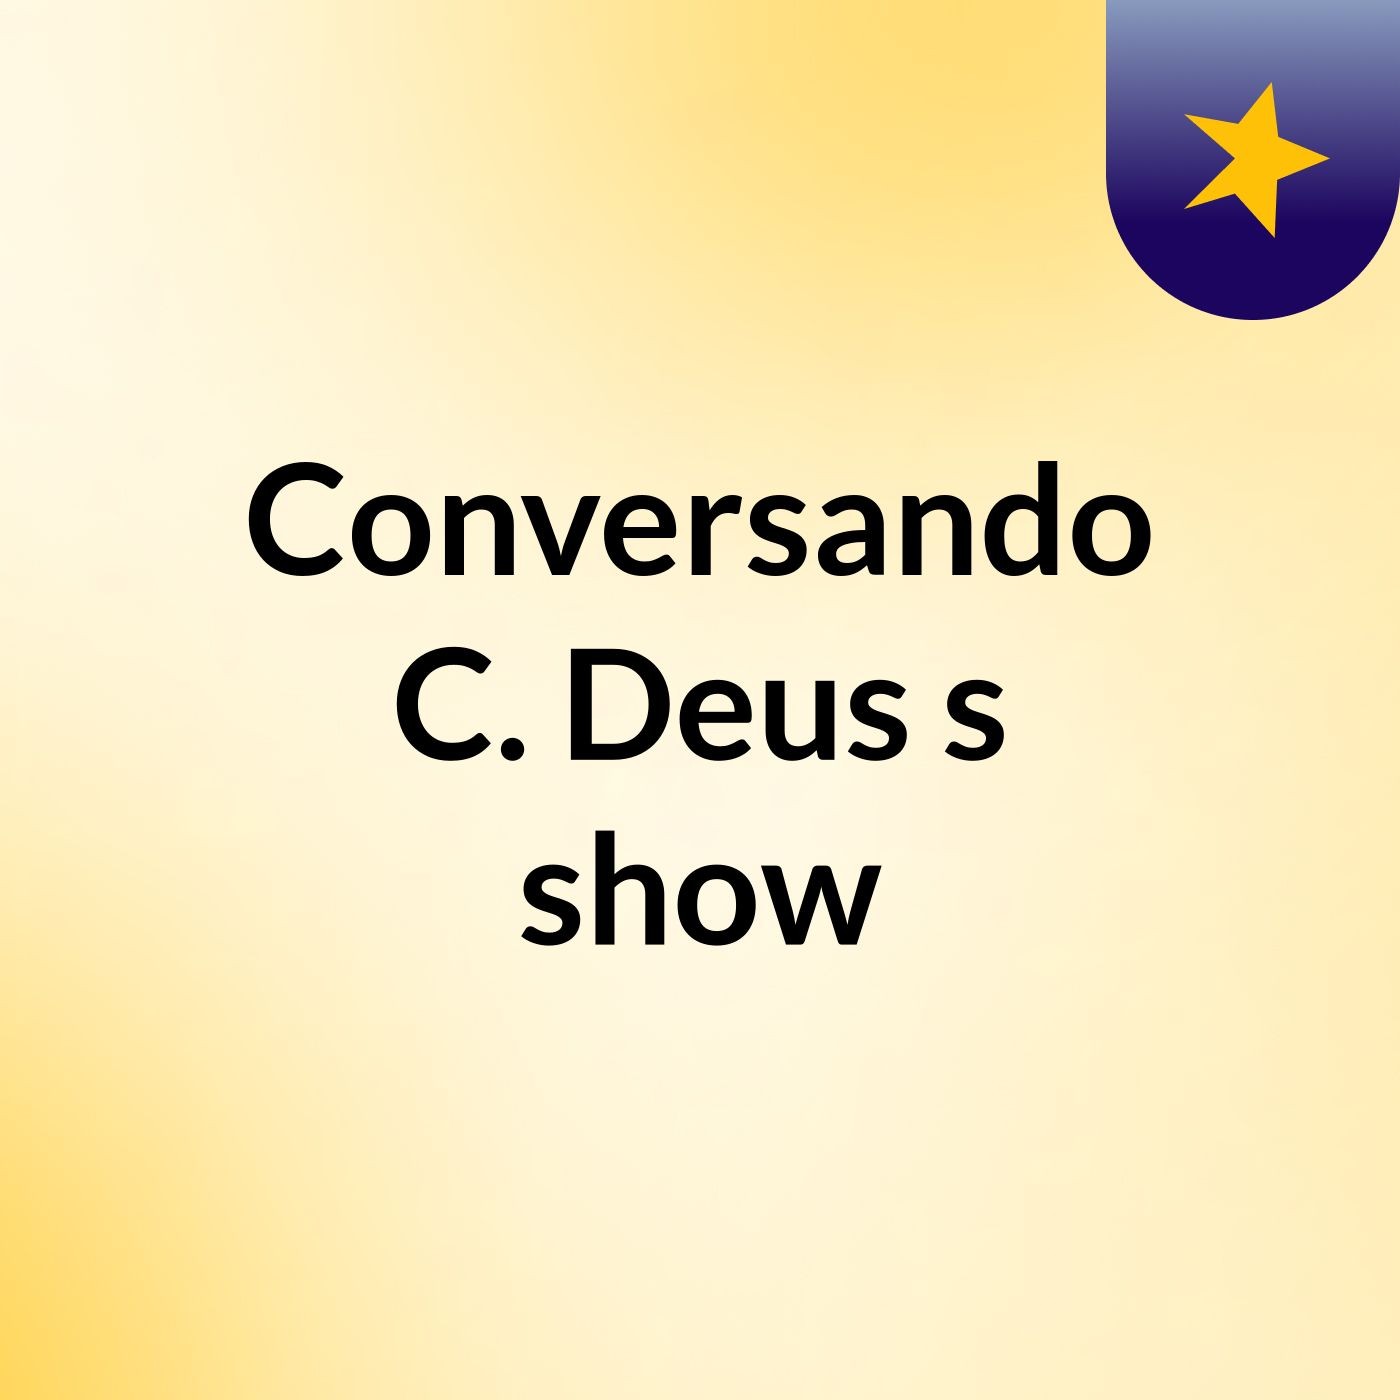 Conversando C. Deus's show